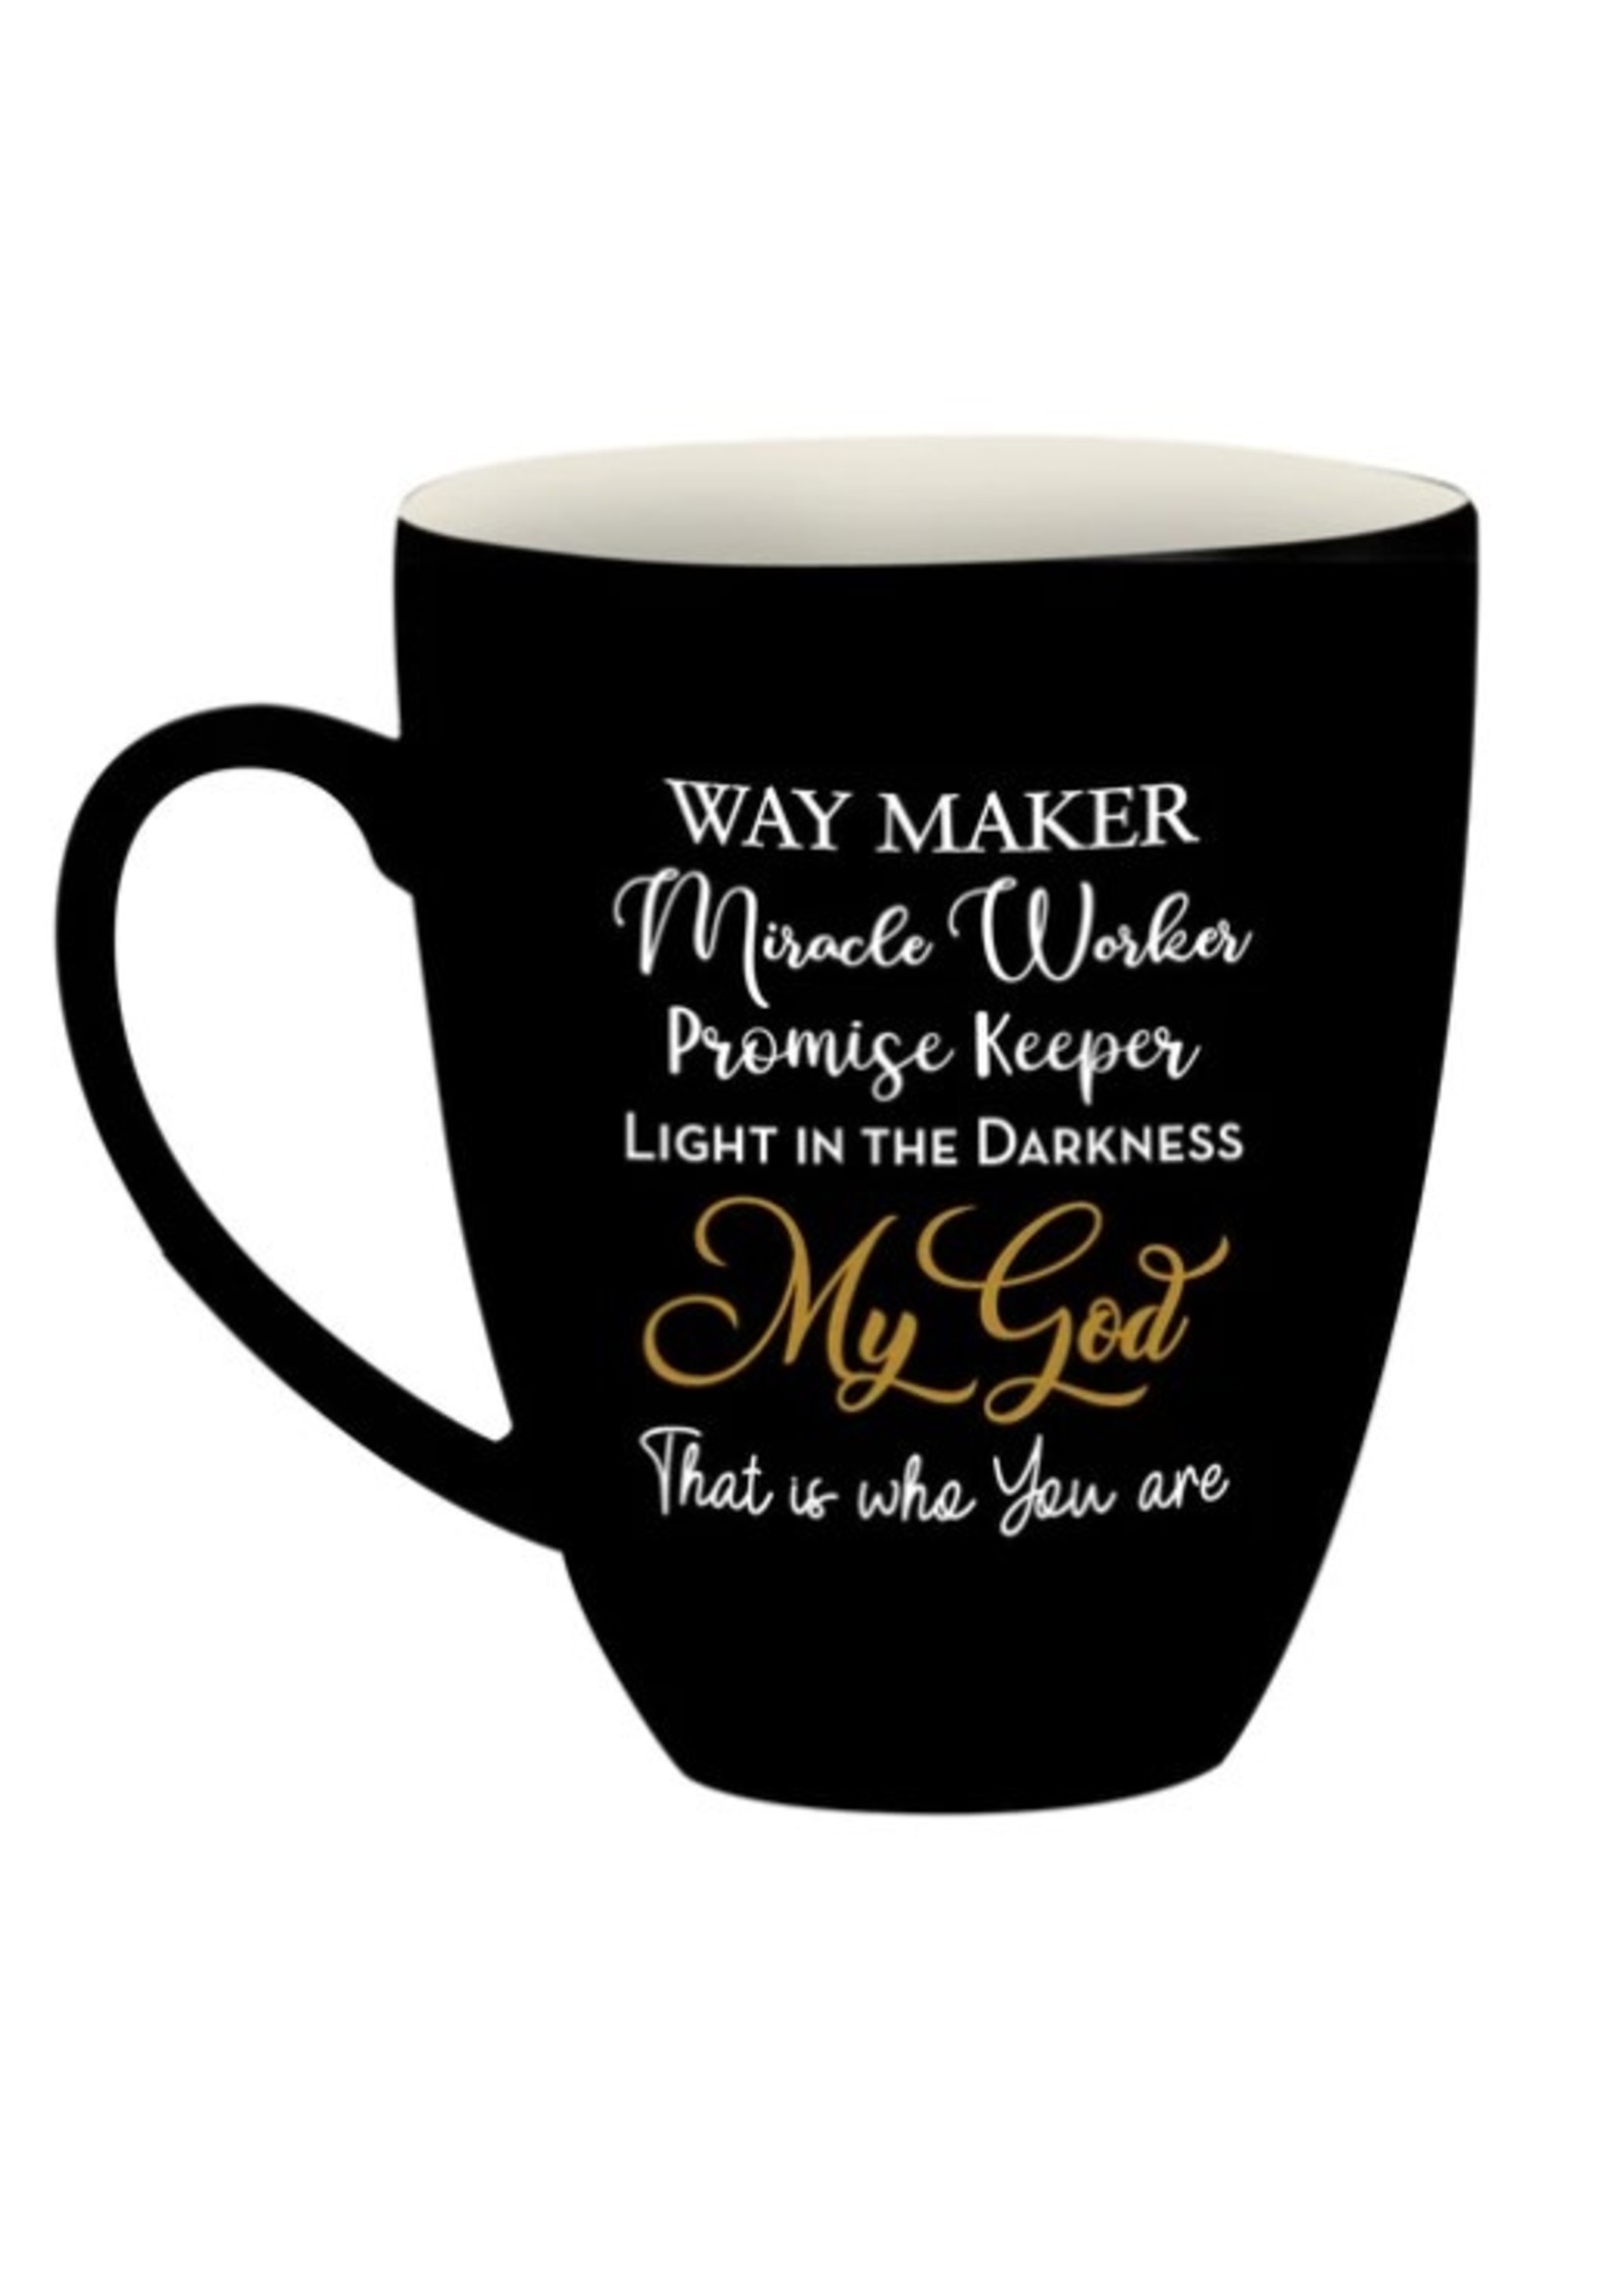 Way Maker Mug